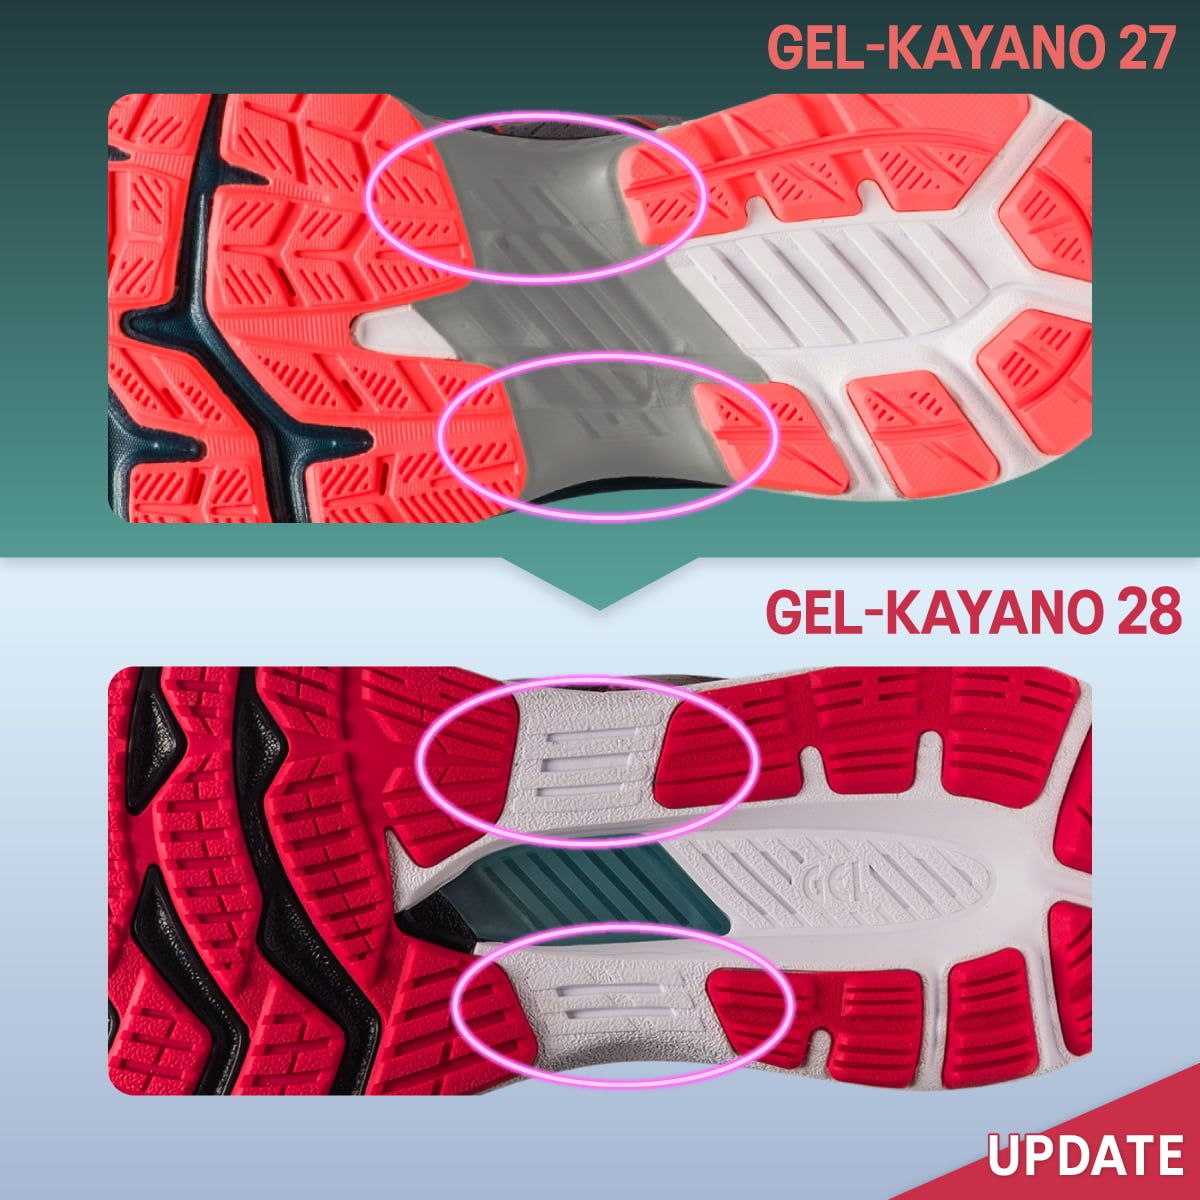 run gel-kayano 28 function update point Kayano 27 vs 28